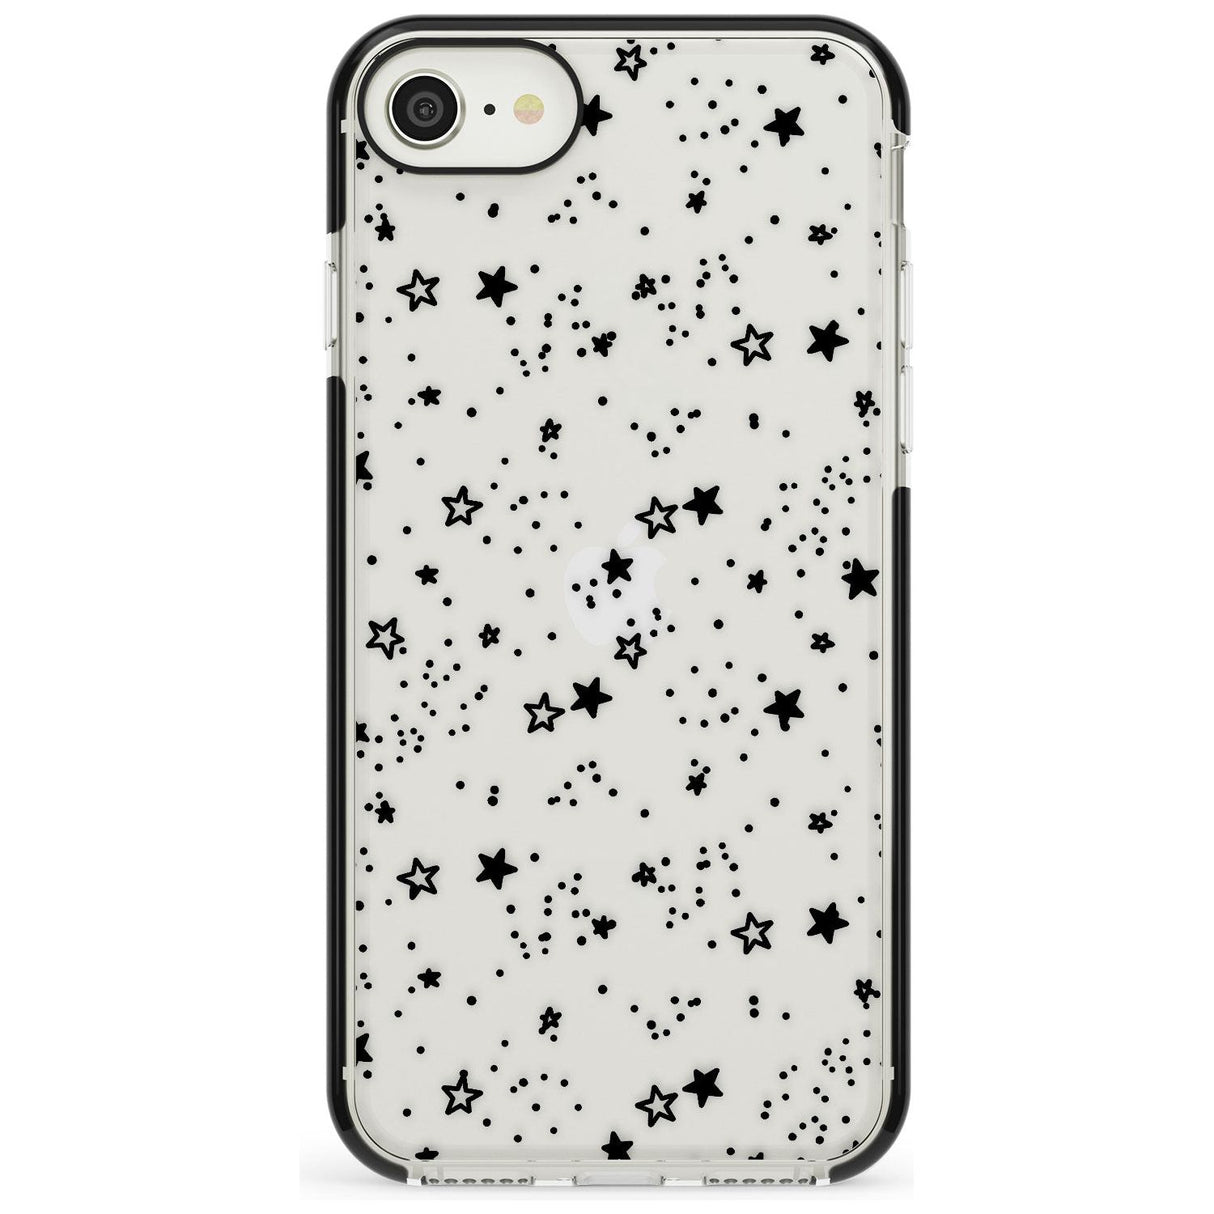 Solid Stars Black Impact Phone Case for iPhone SE 8 7 Plus